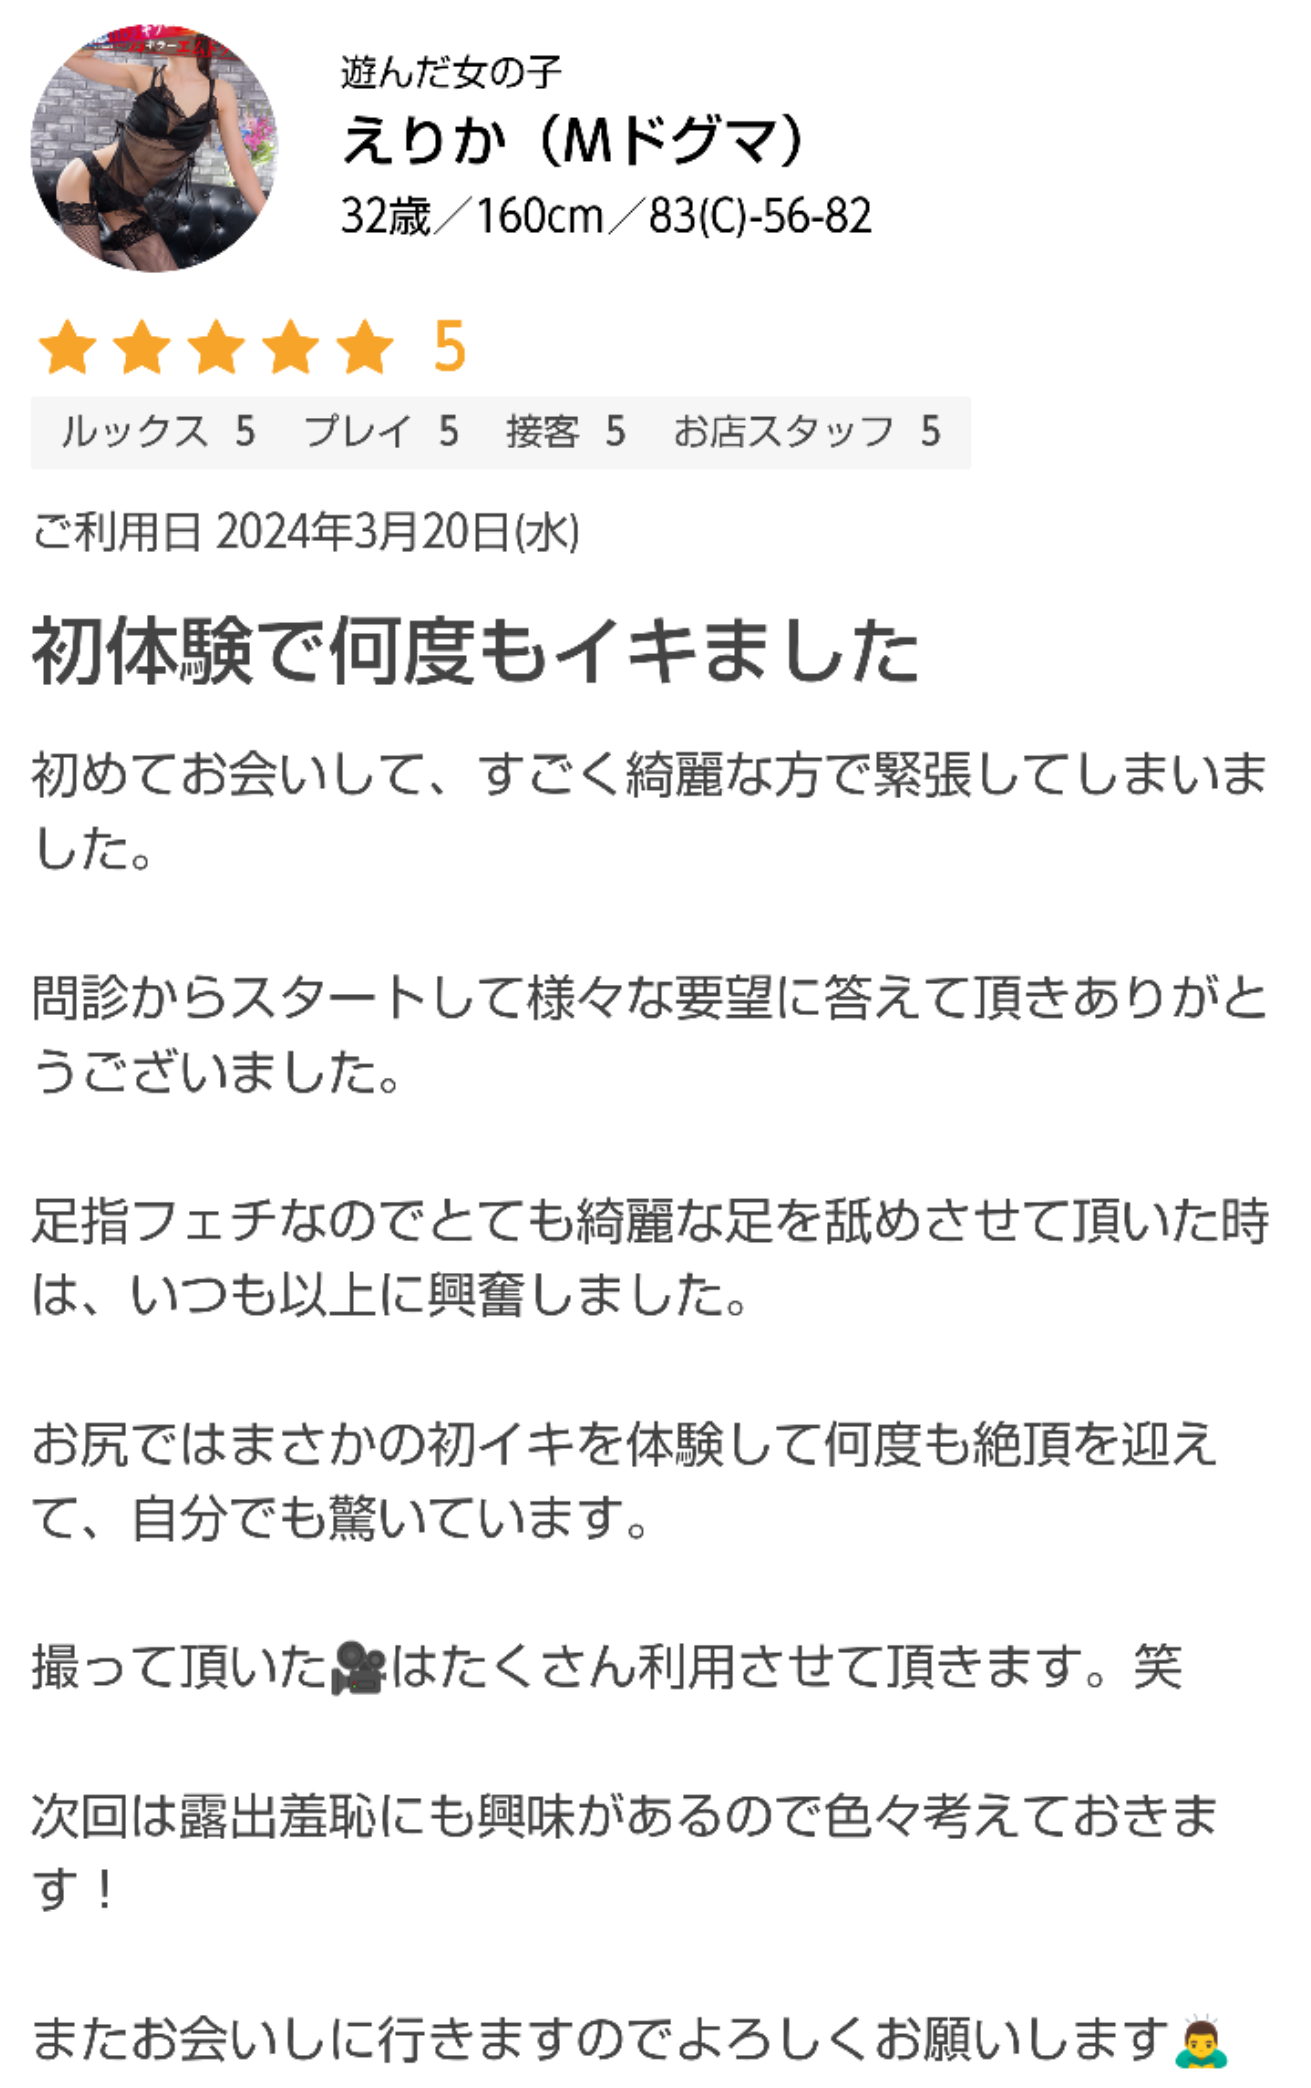 <img class="emojione" alt="💙" title=":blue_heart:" src="https://fuzoku.jp/assets/img/emojione/1f499.png"/>くちこみありがとう<img class="emojione" alt="💙" title=":blue_heart:" src="https://fuzoku.jp/assets/img/emojione/1f499.png"/>